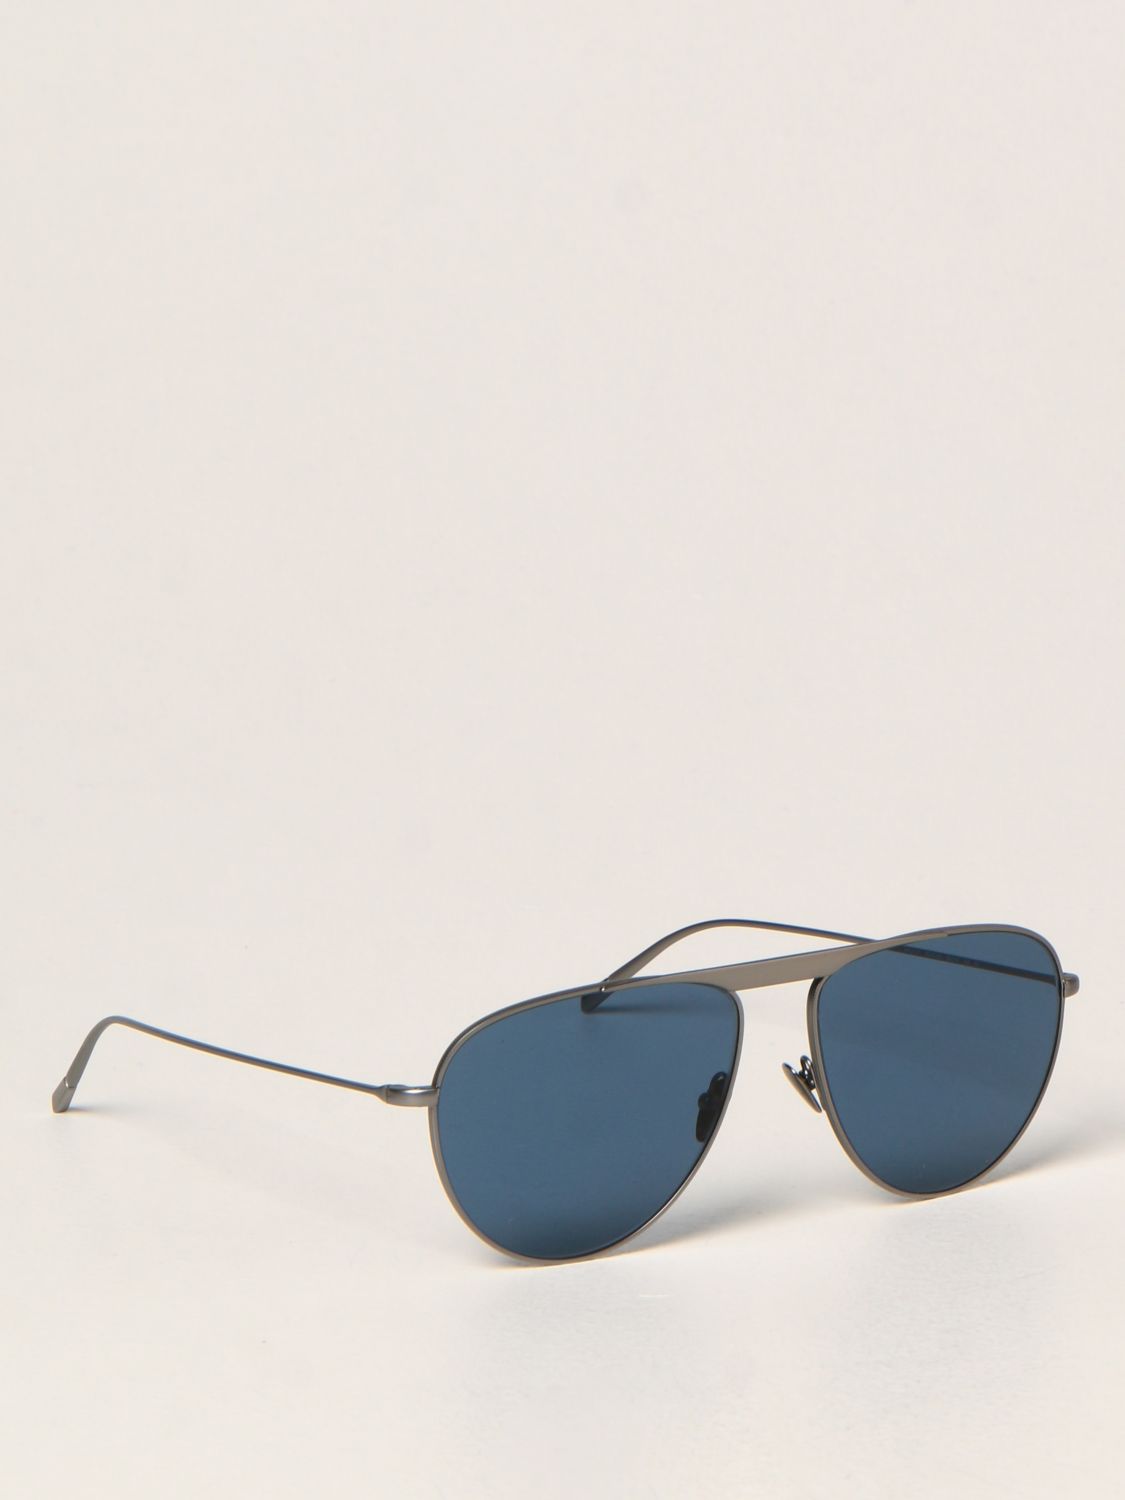 60% Sunglasses New NEW Sunglasses Giorgio Armani Outlet 